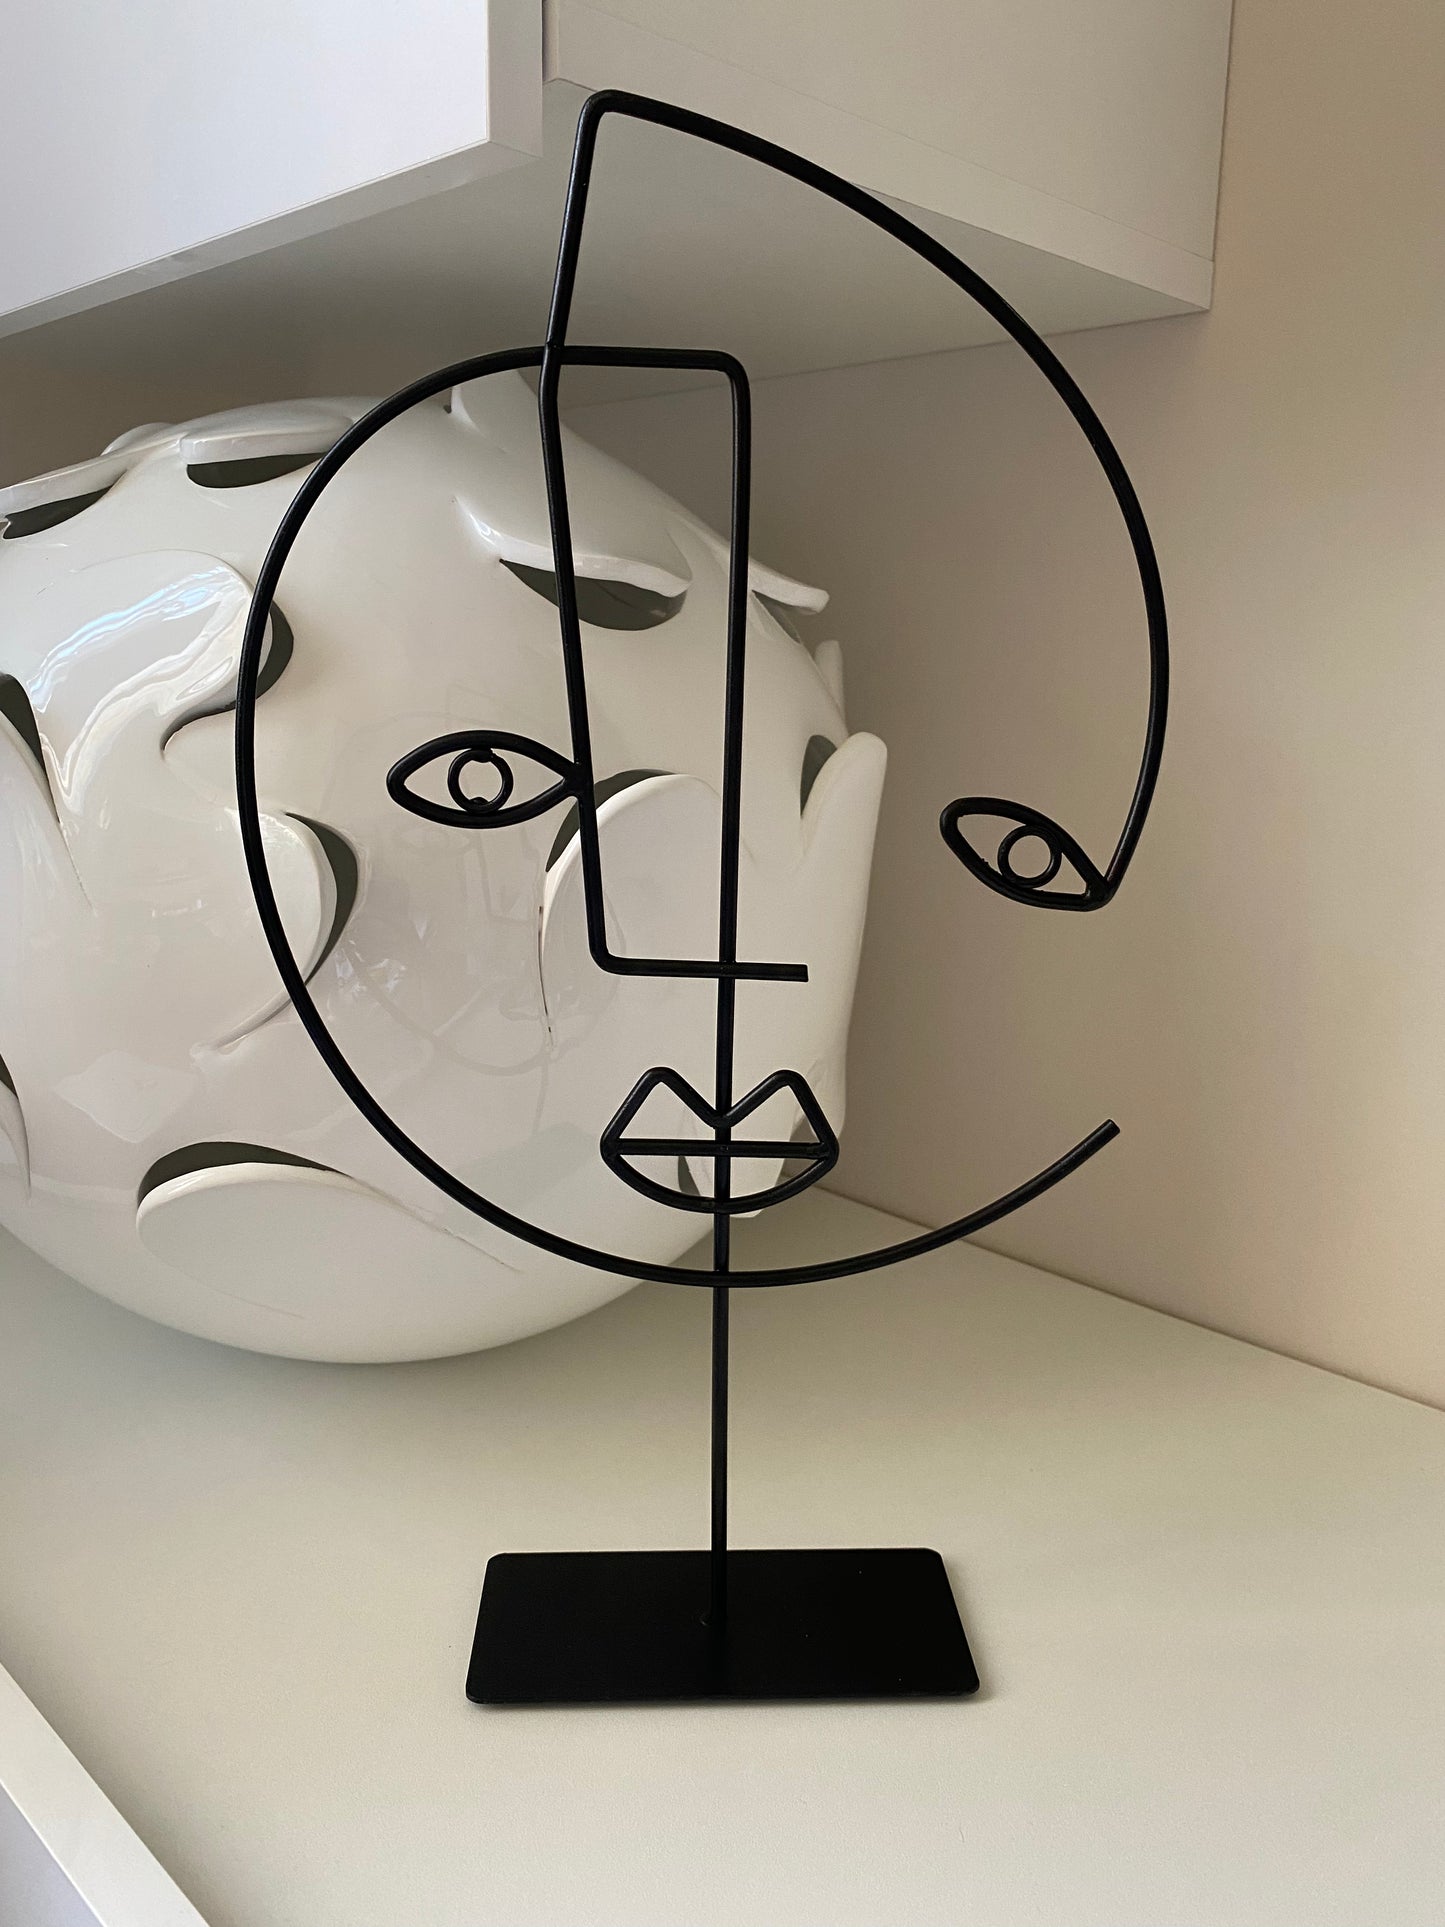  Decor - Man's face, H37cm